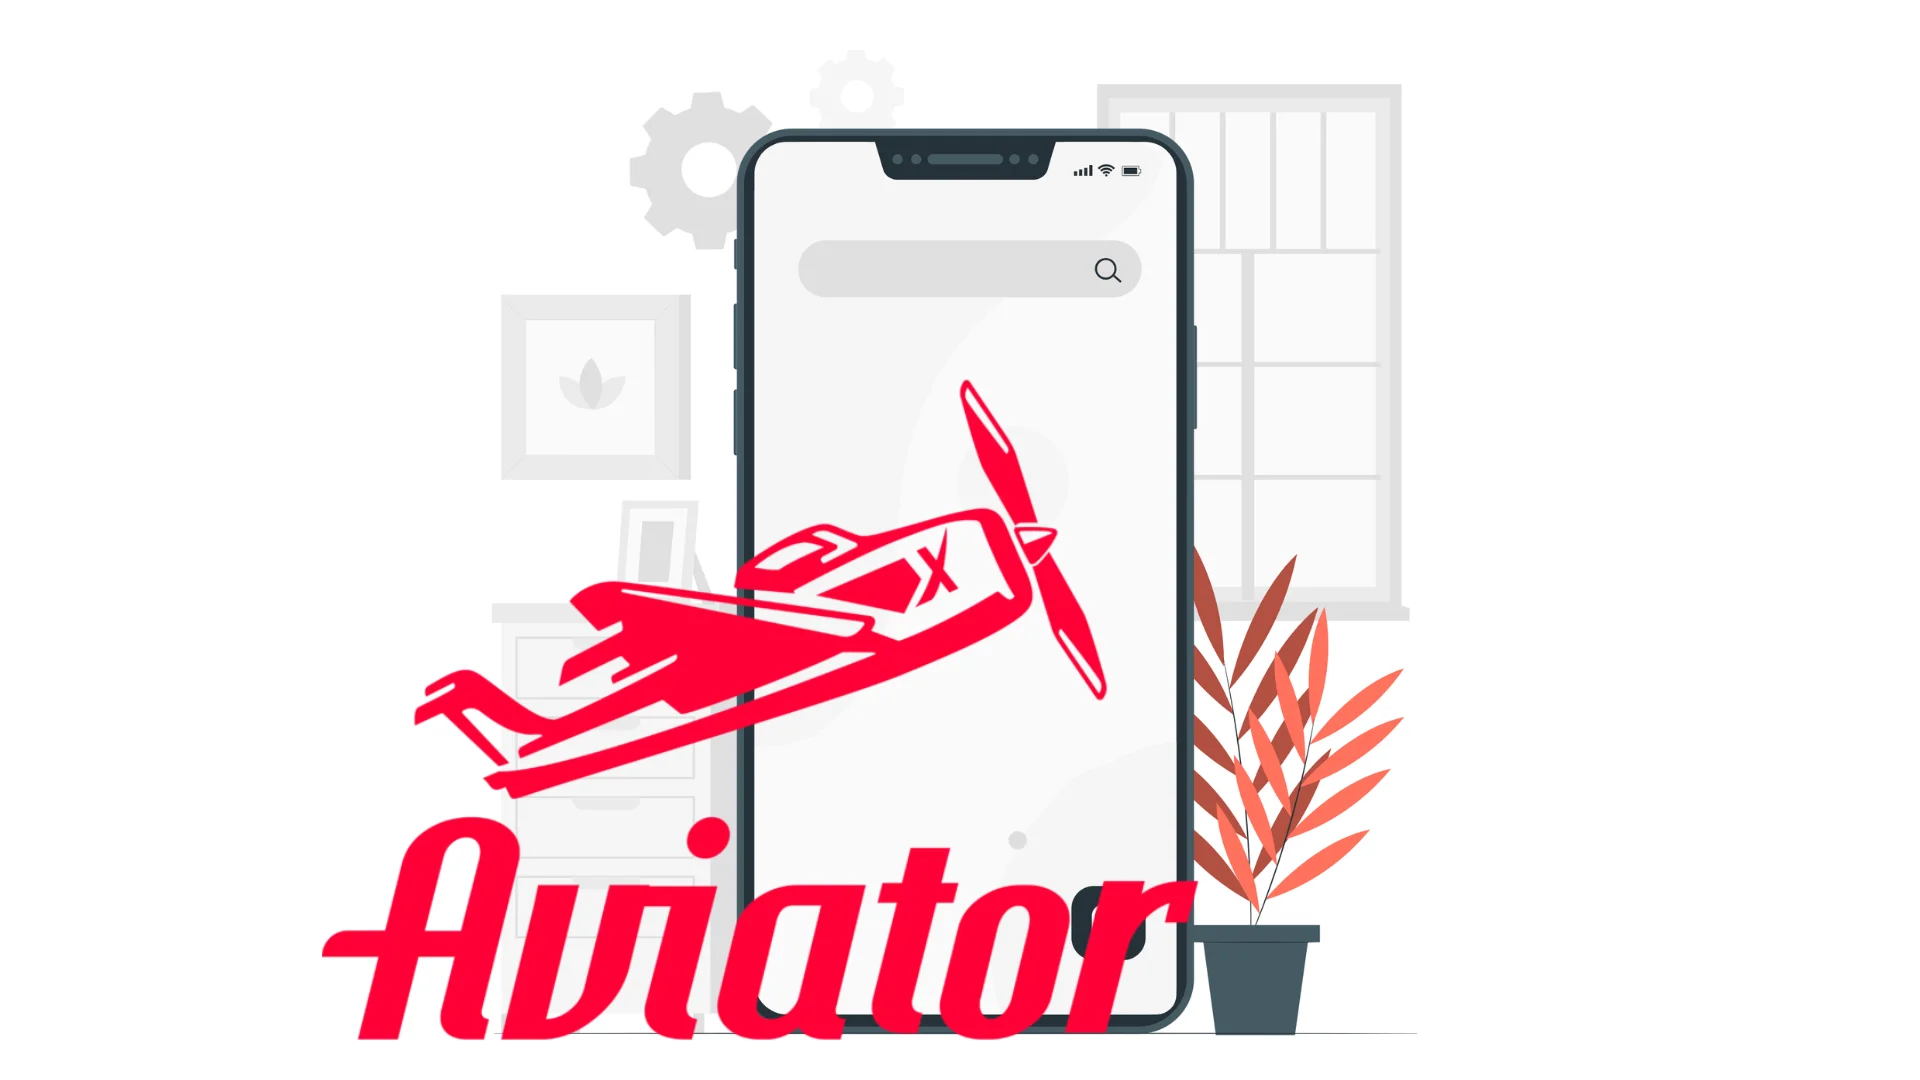 Aviator game logo and mobile phone